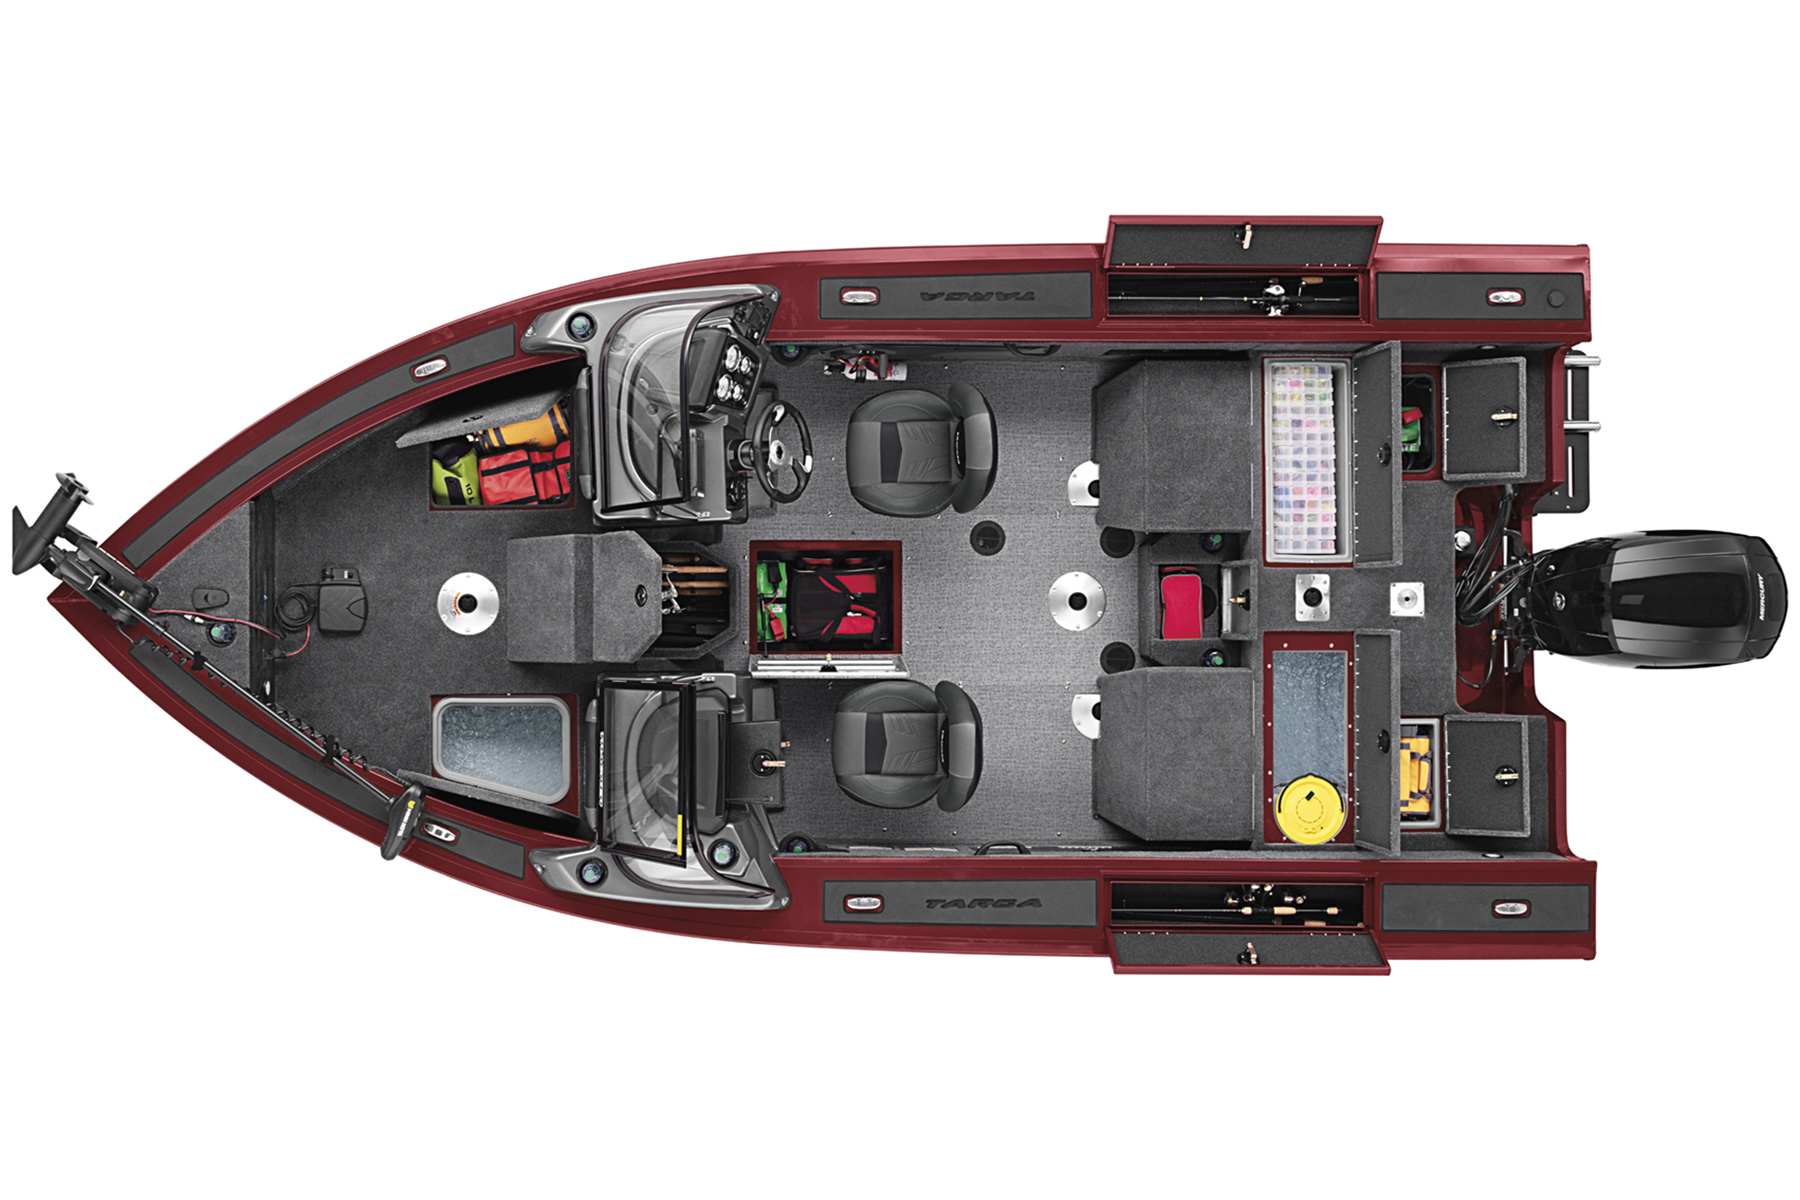  aluminum fishing boat 2022 Tracker Targa V18 Combo Exclusive Auto Marine power boat outboard motors